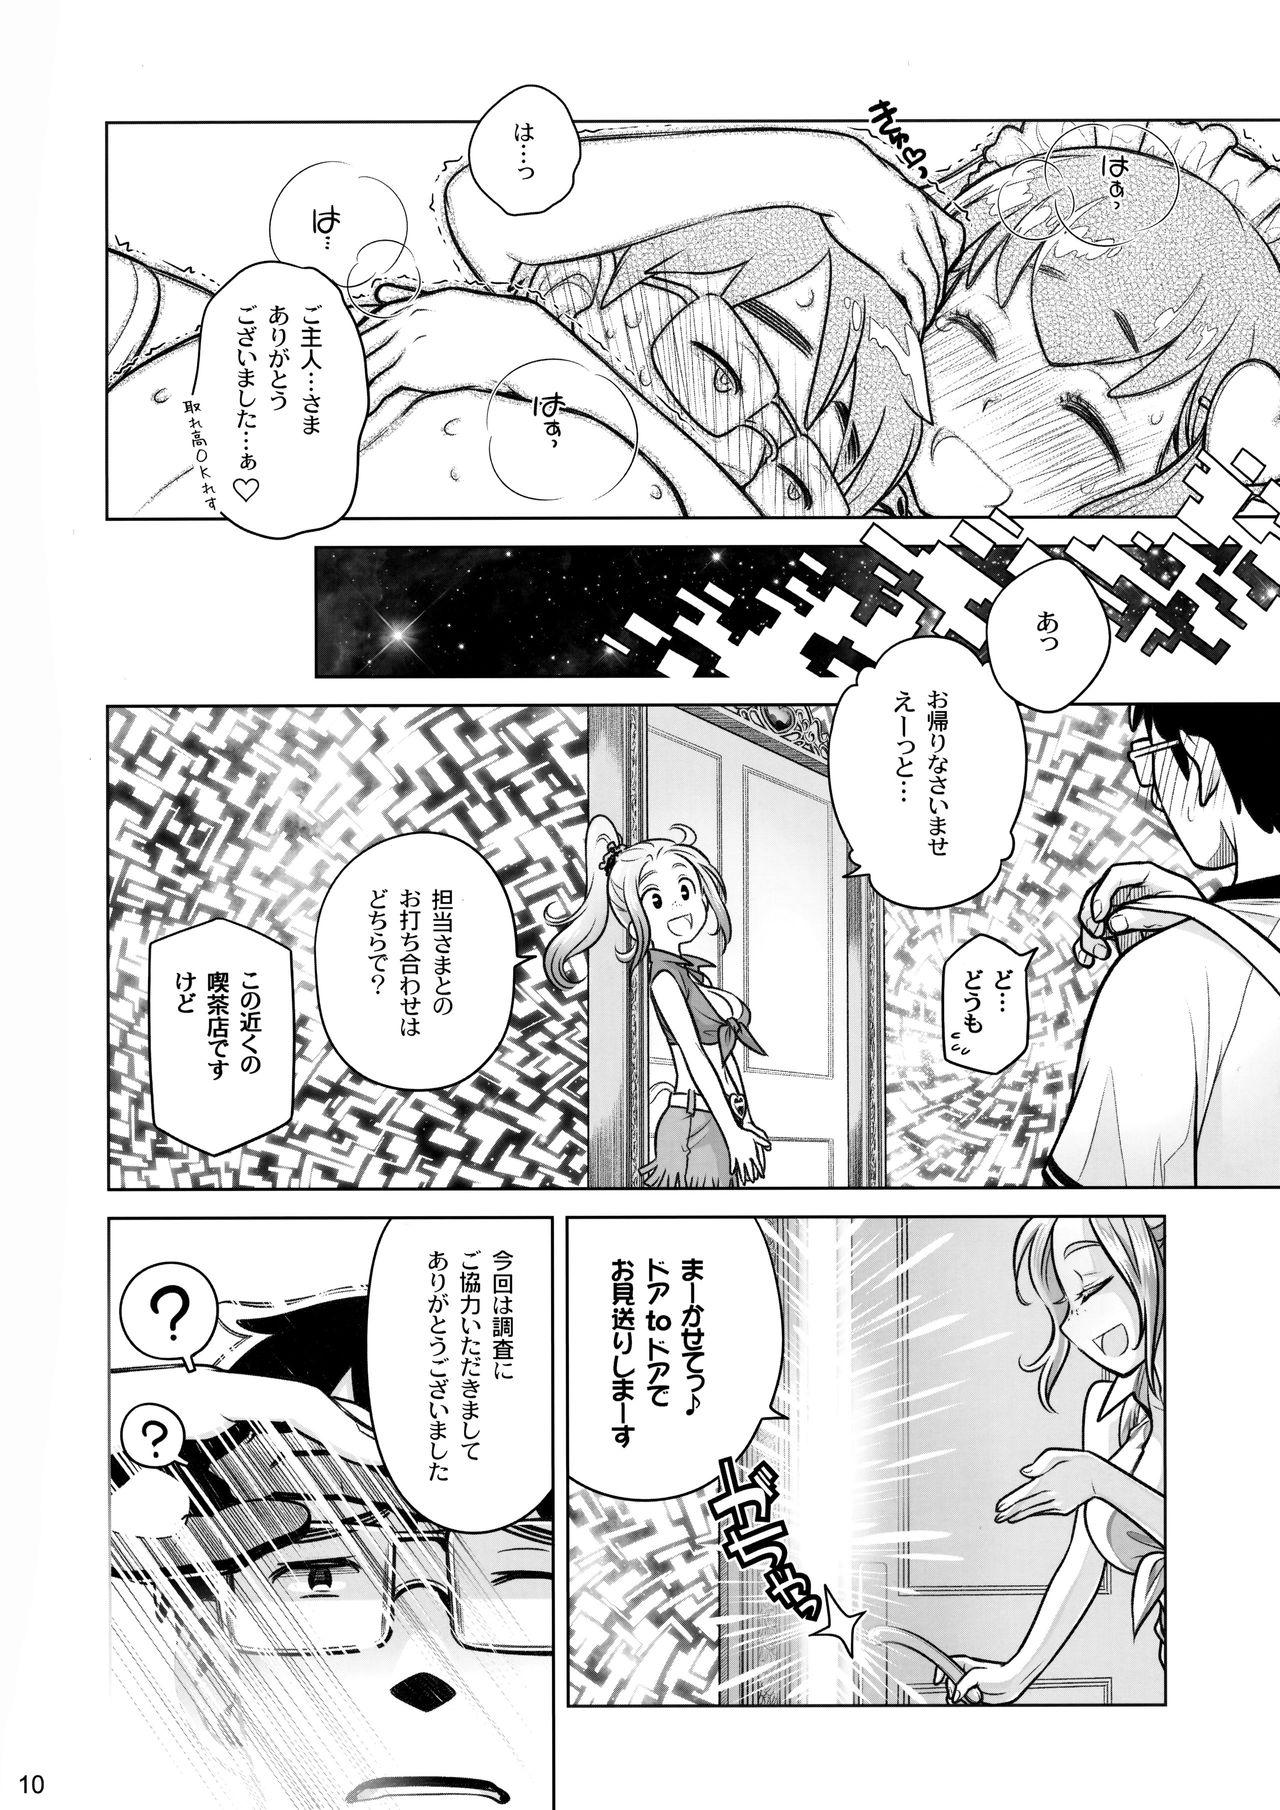 Shot Sorako no Tabi 7 Culazo - Page 9